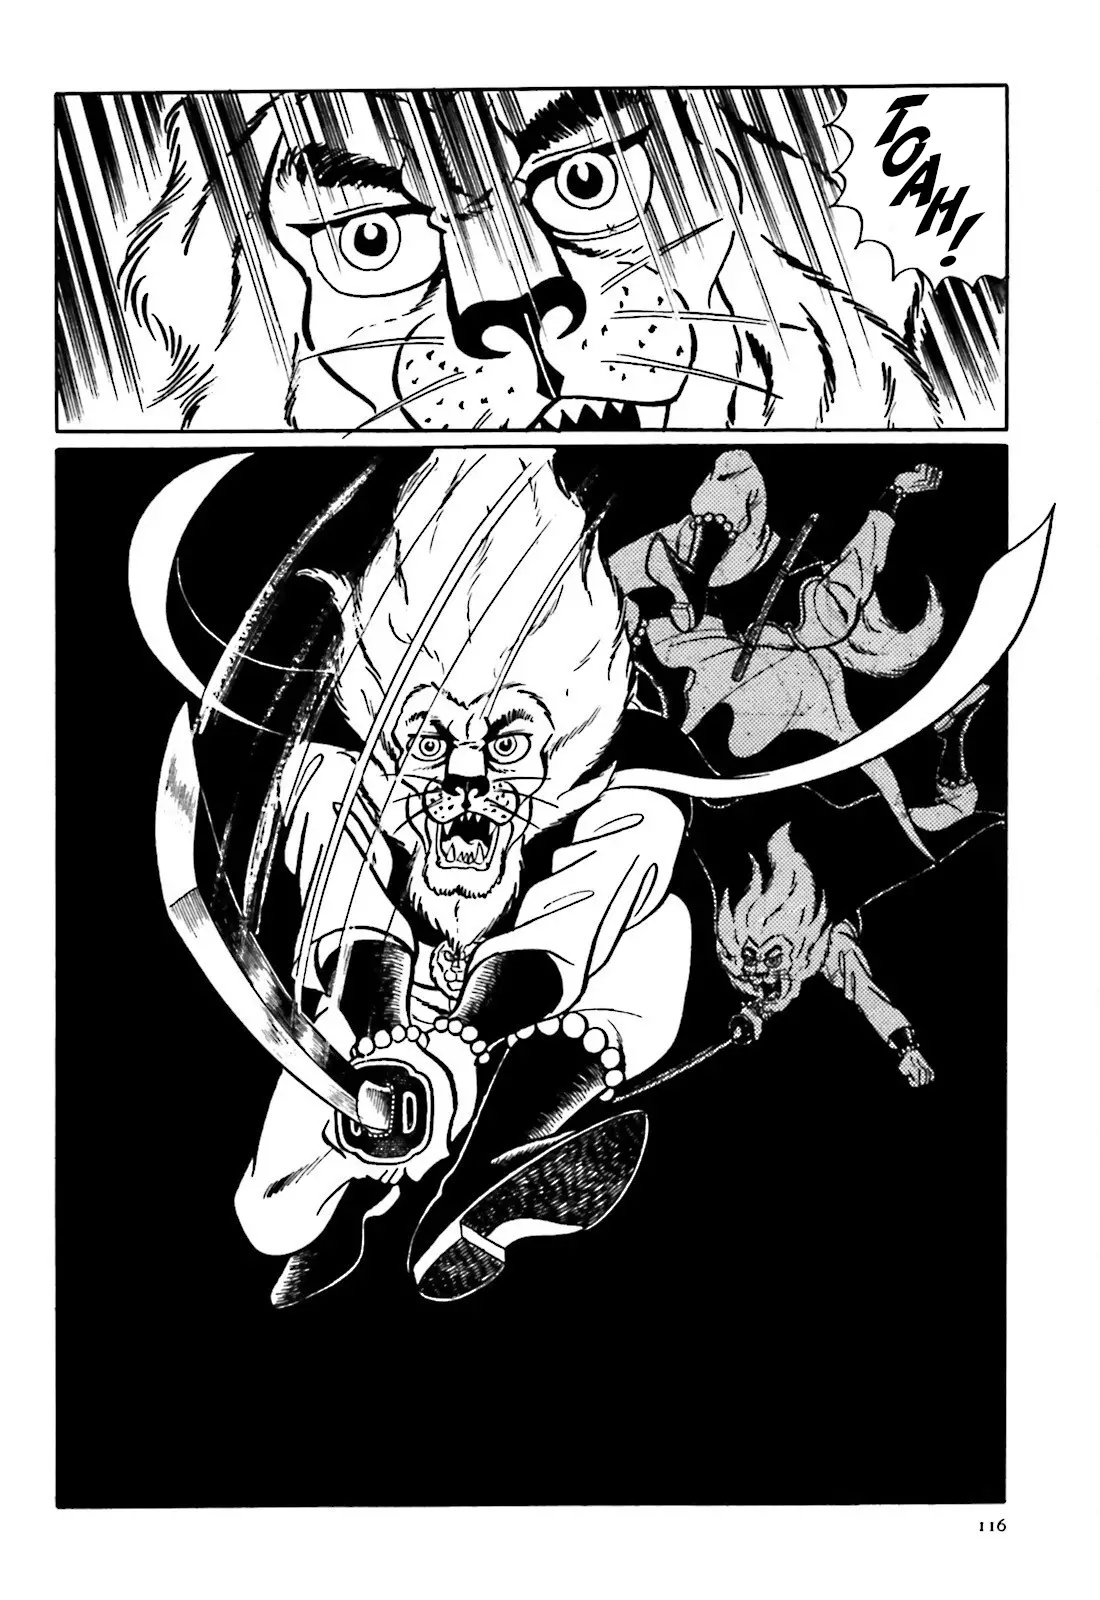 The Vigilant Lionmaru - 3 page 2-8eb110a0